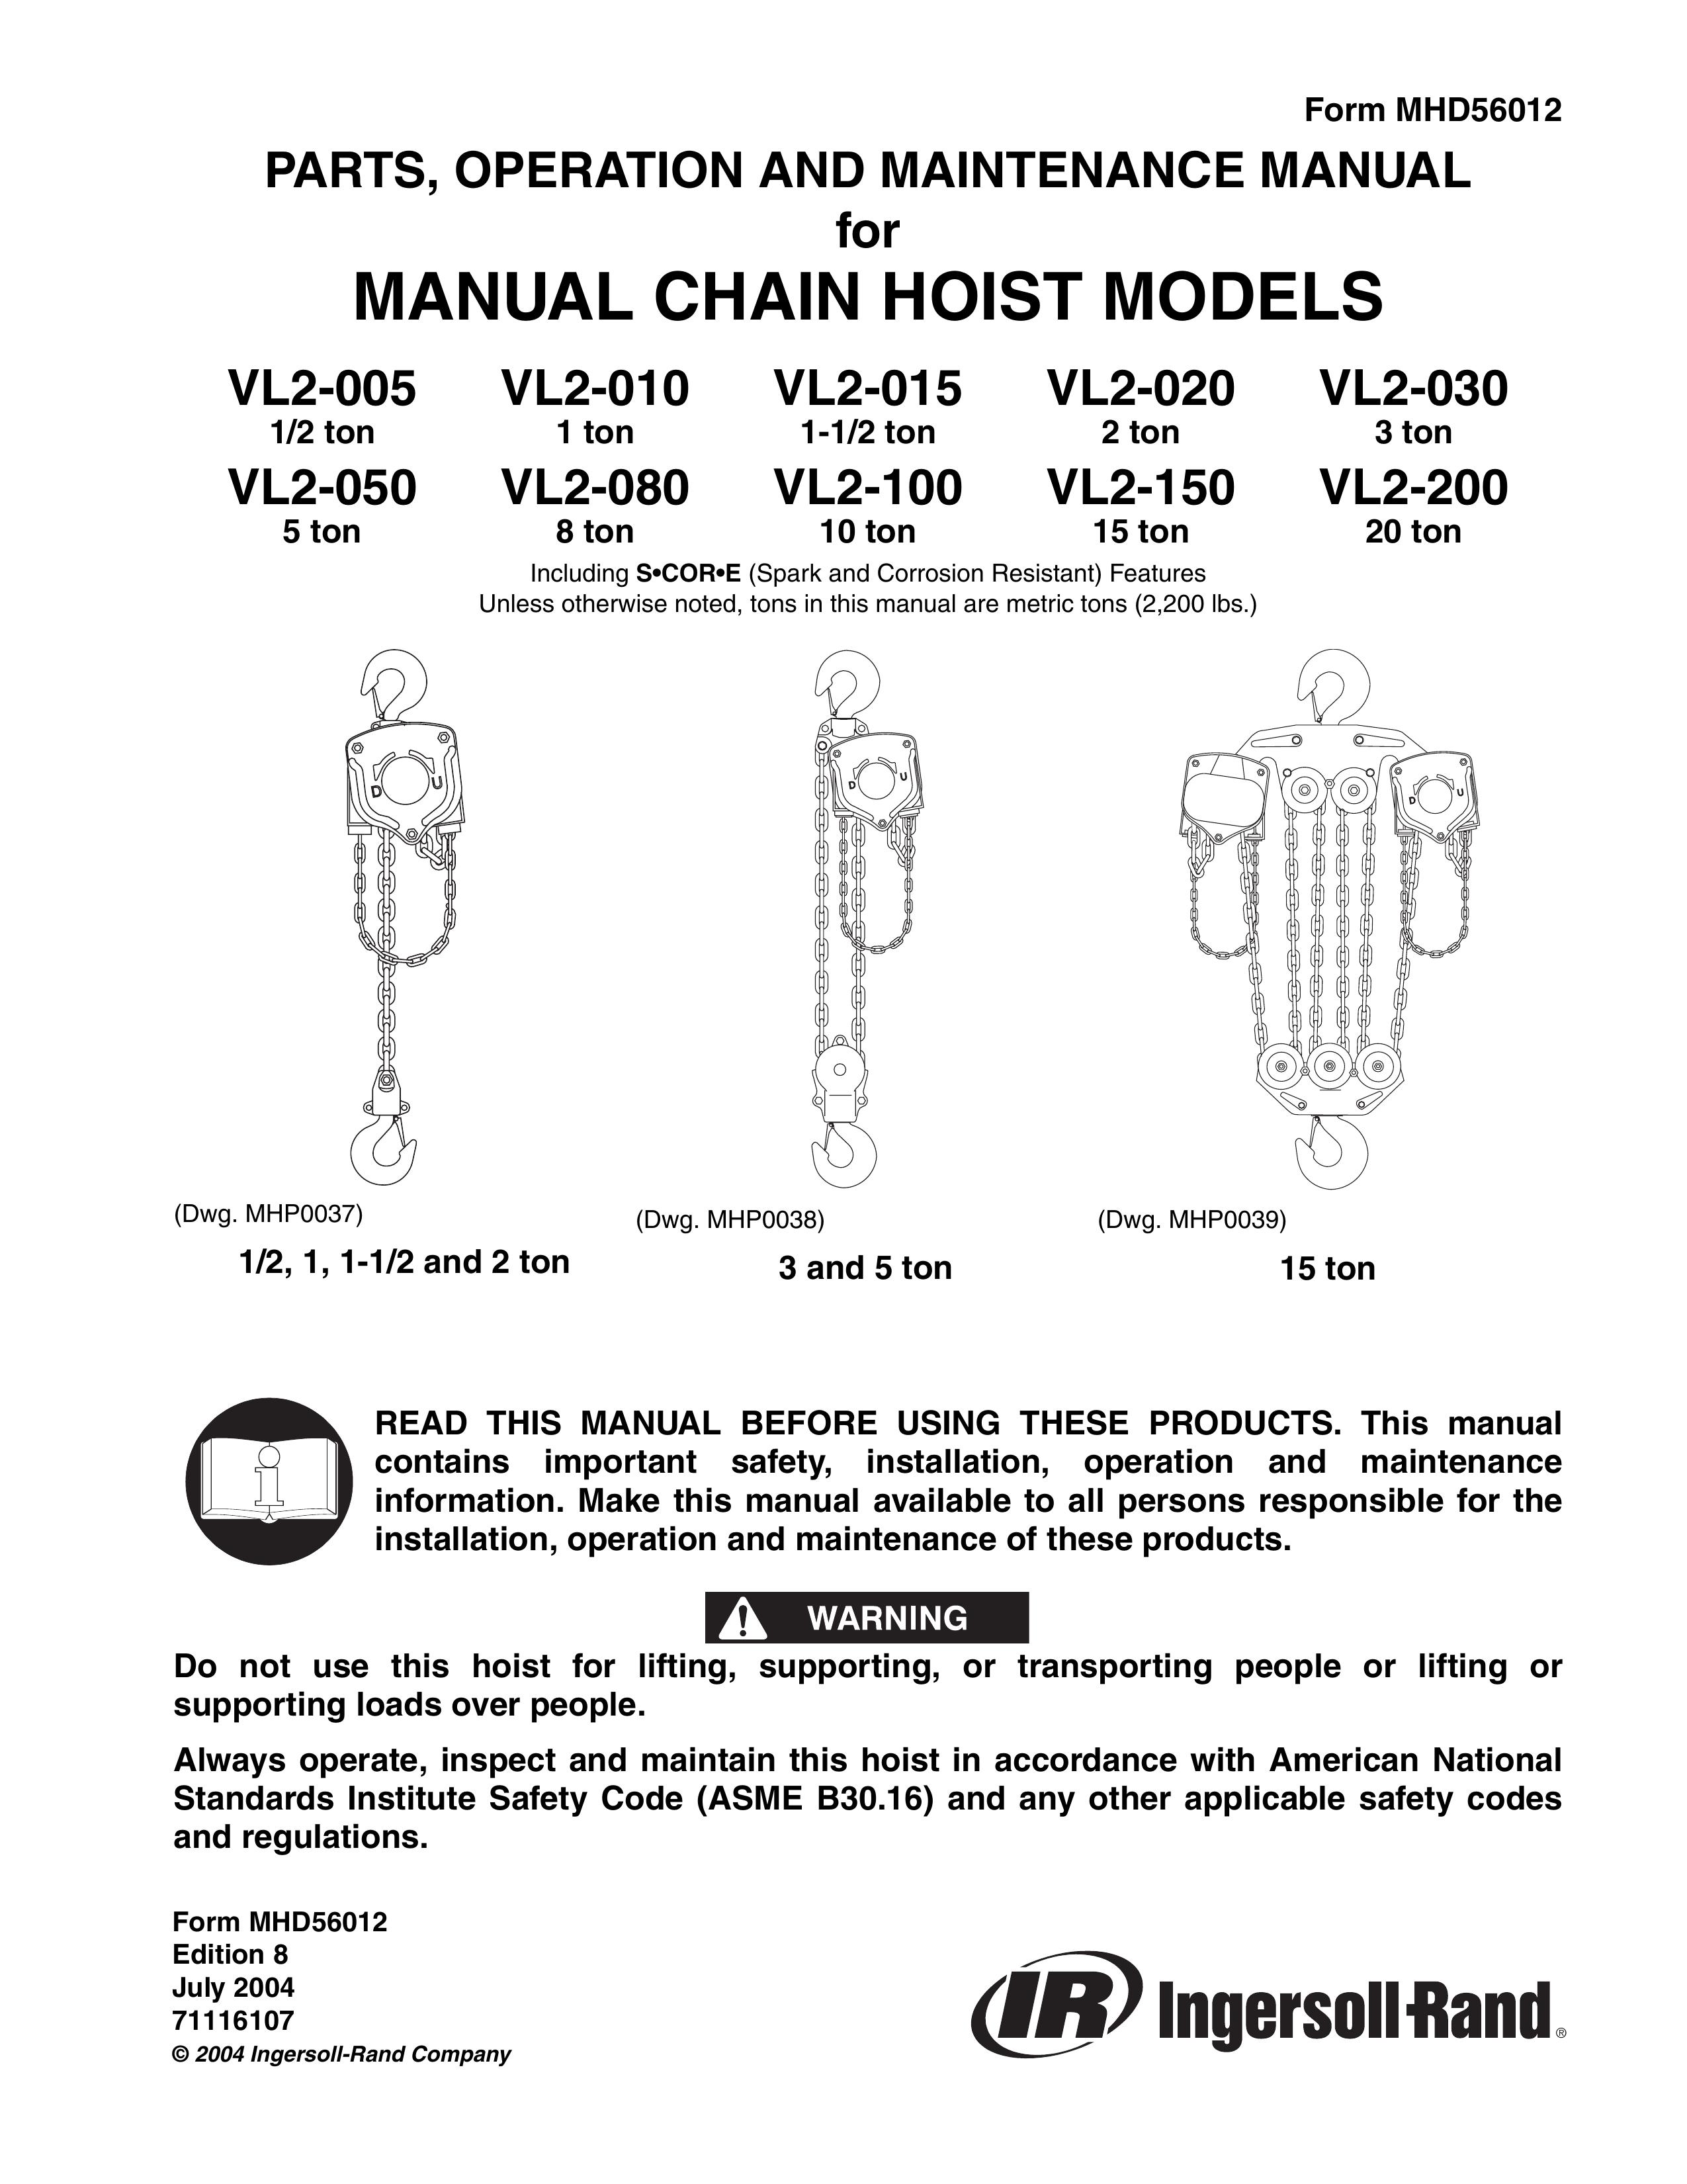 Ingersoll-Rand VL2-200 Digital Photo Keychain User Manual